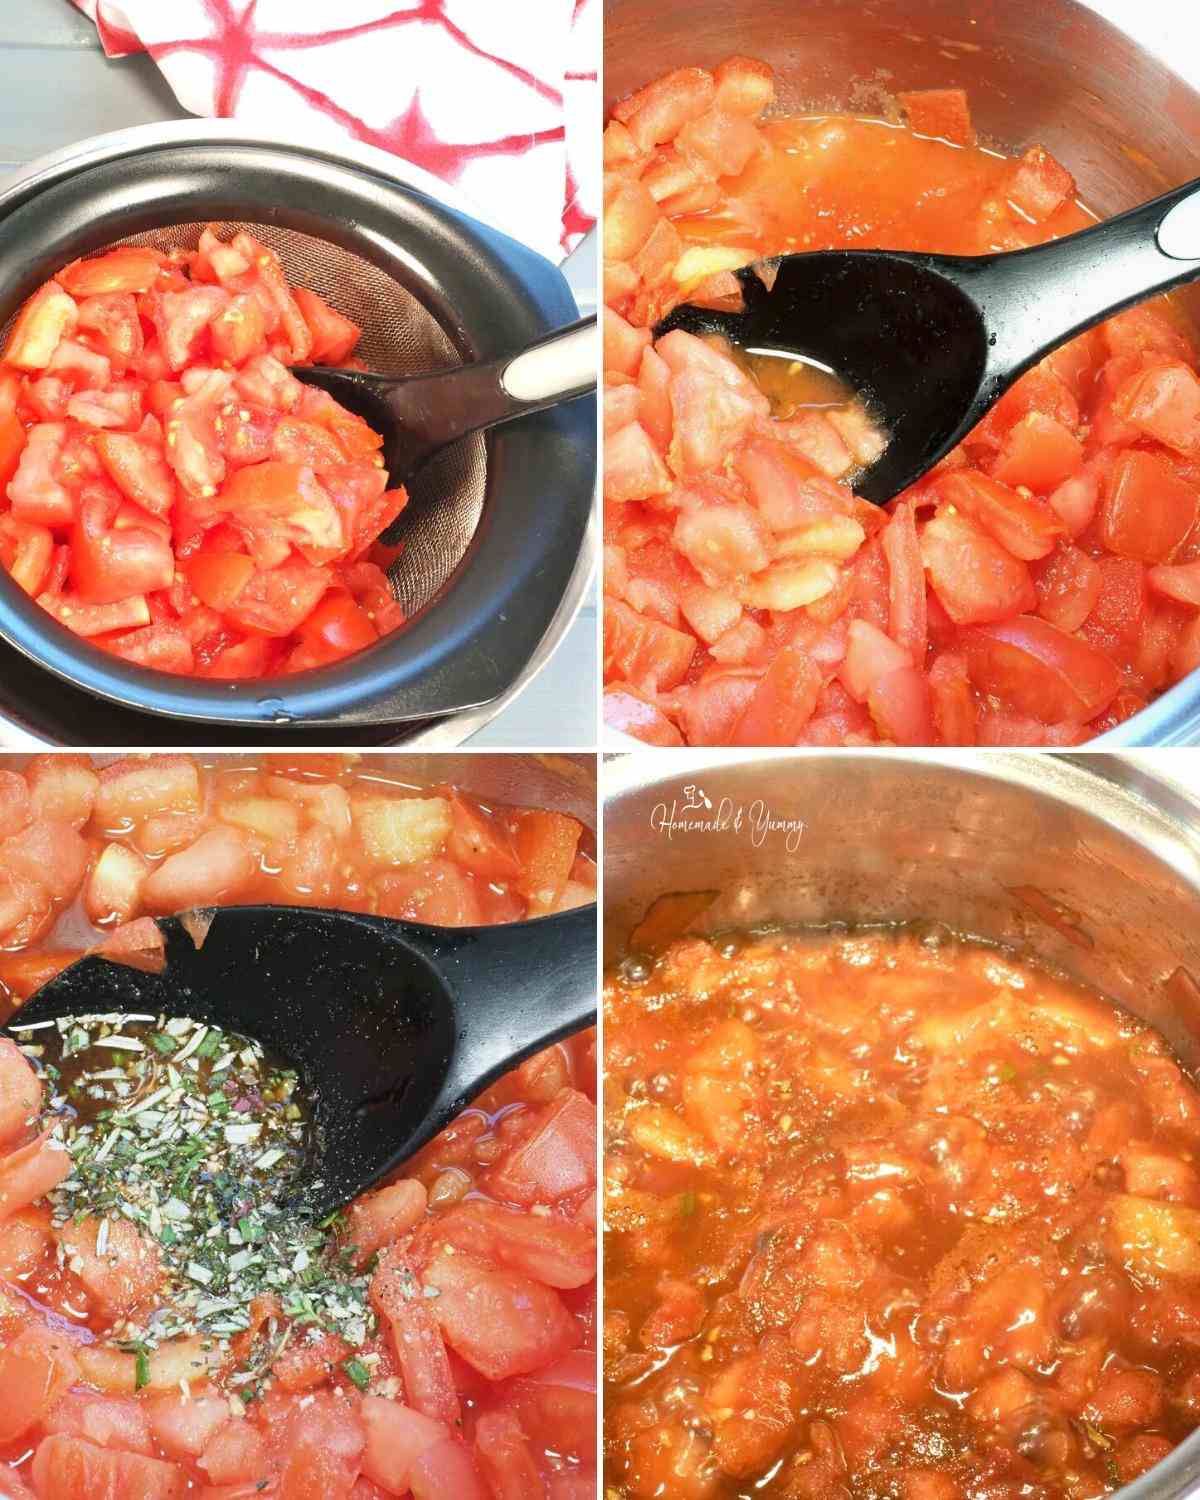 Preparing the tomatoes to make jam.